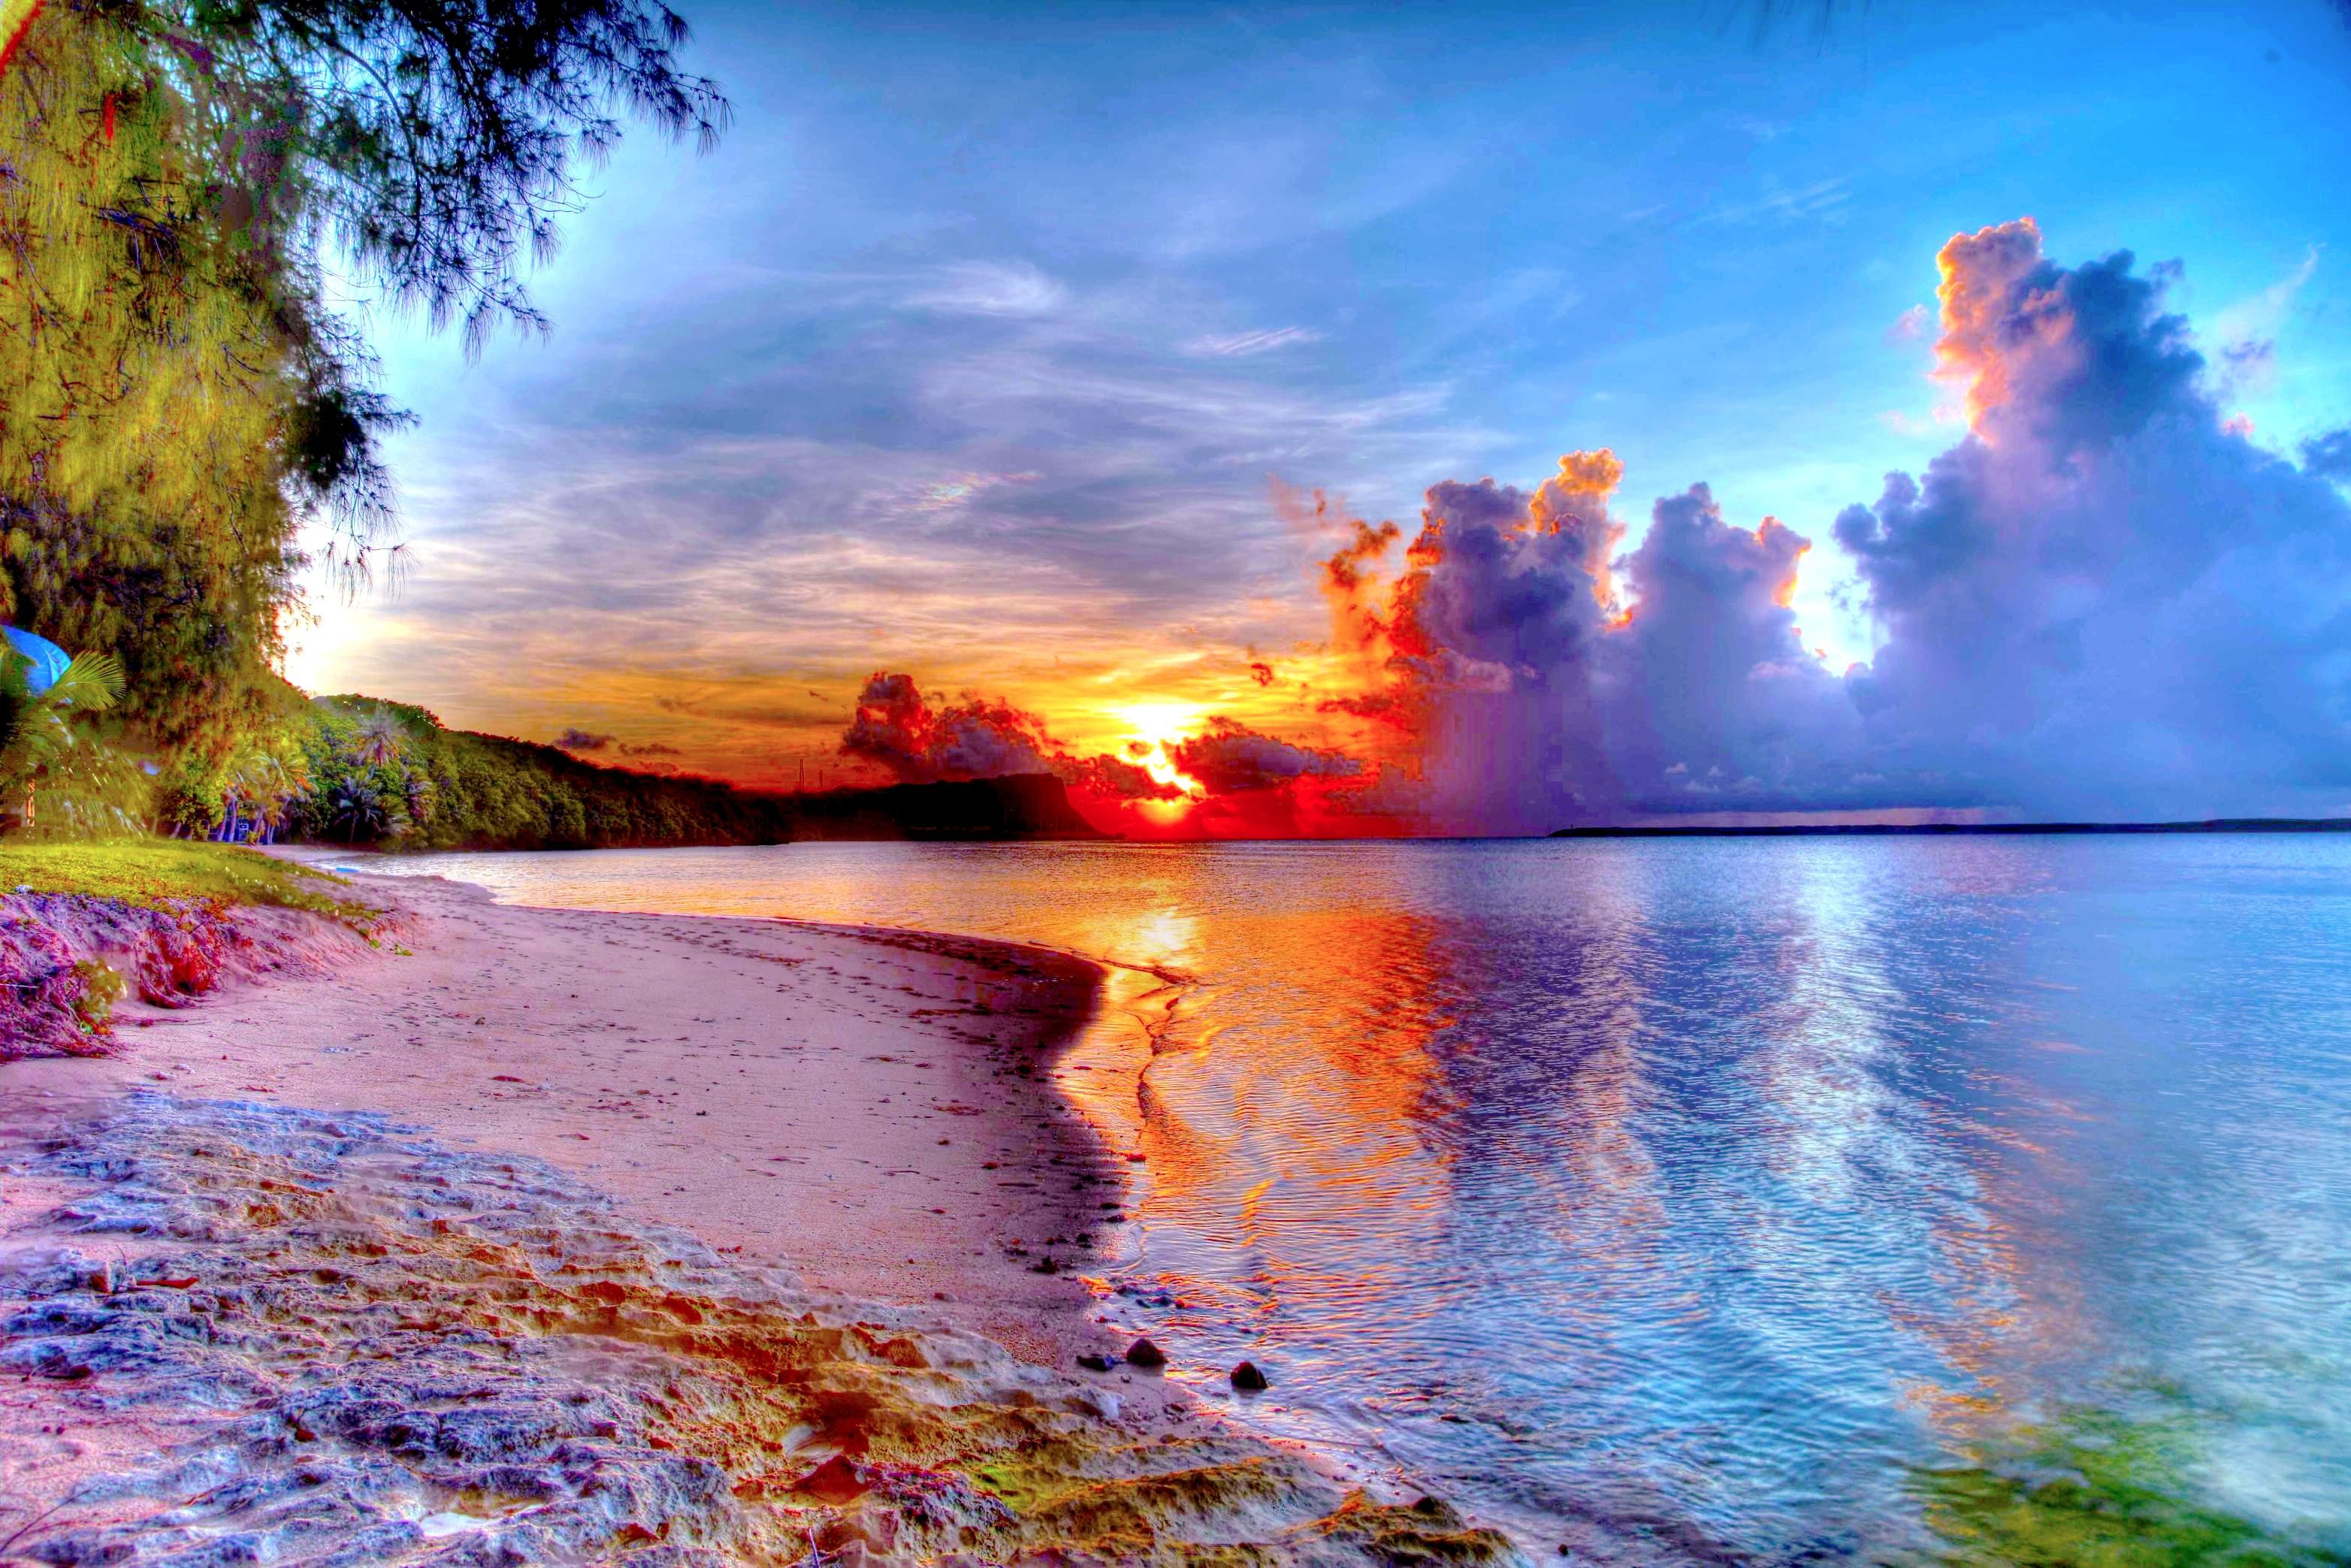 Guam Beaches Desktop Wallpaper Image